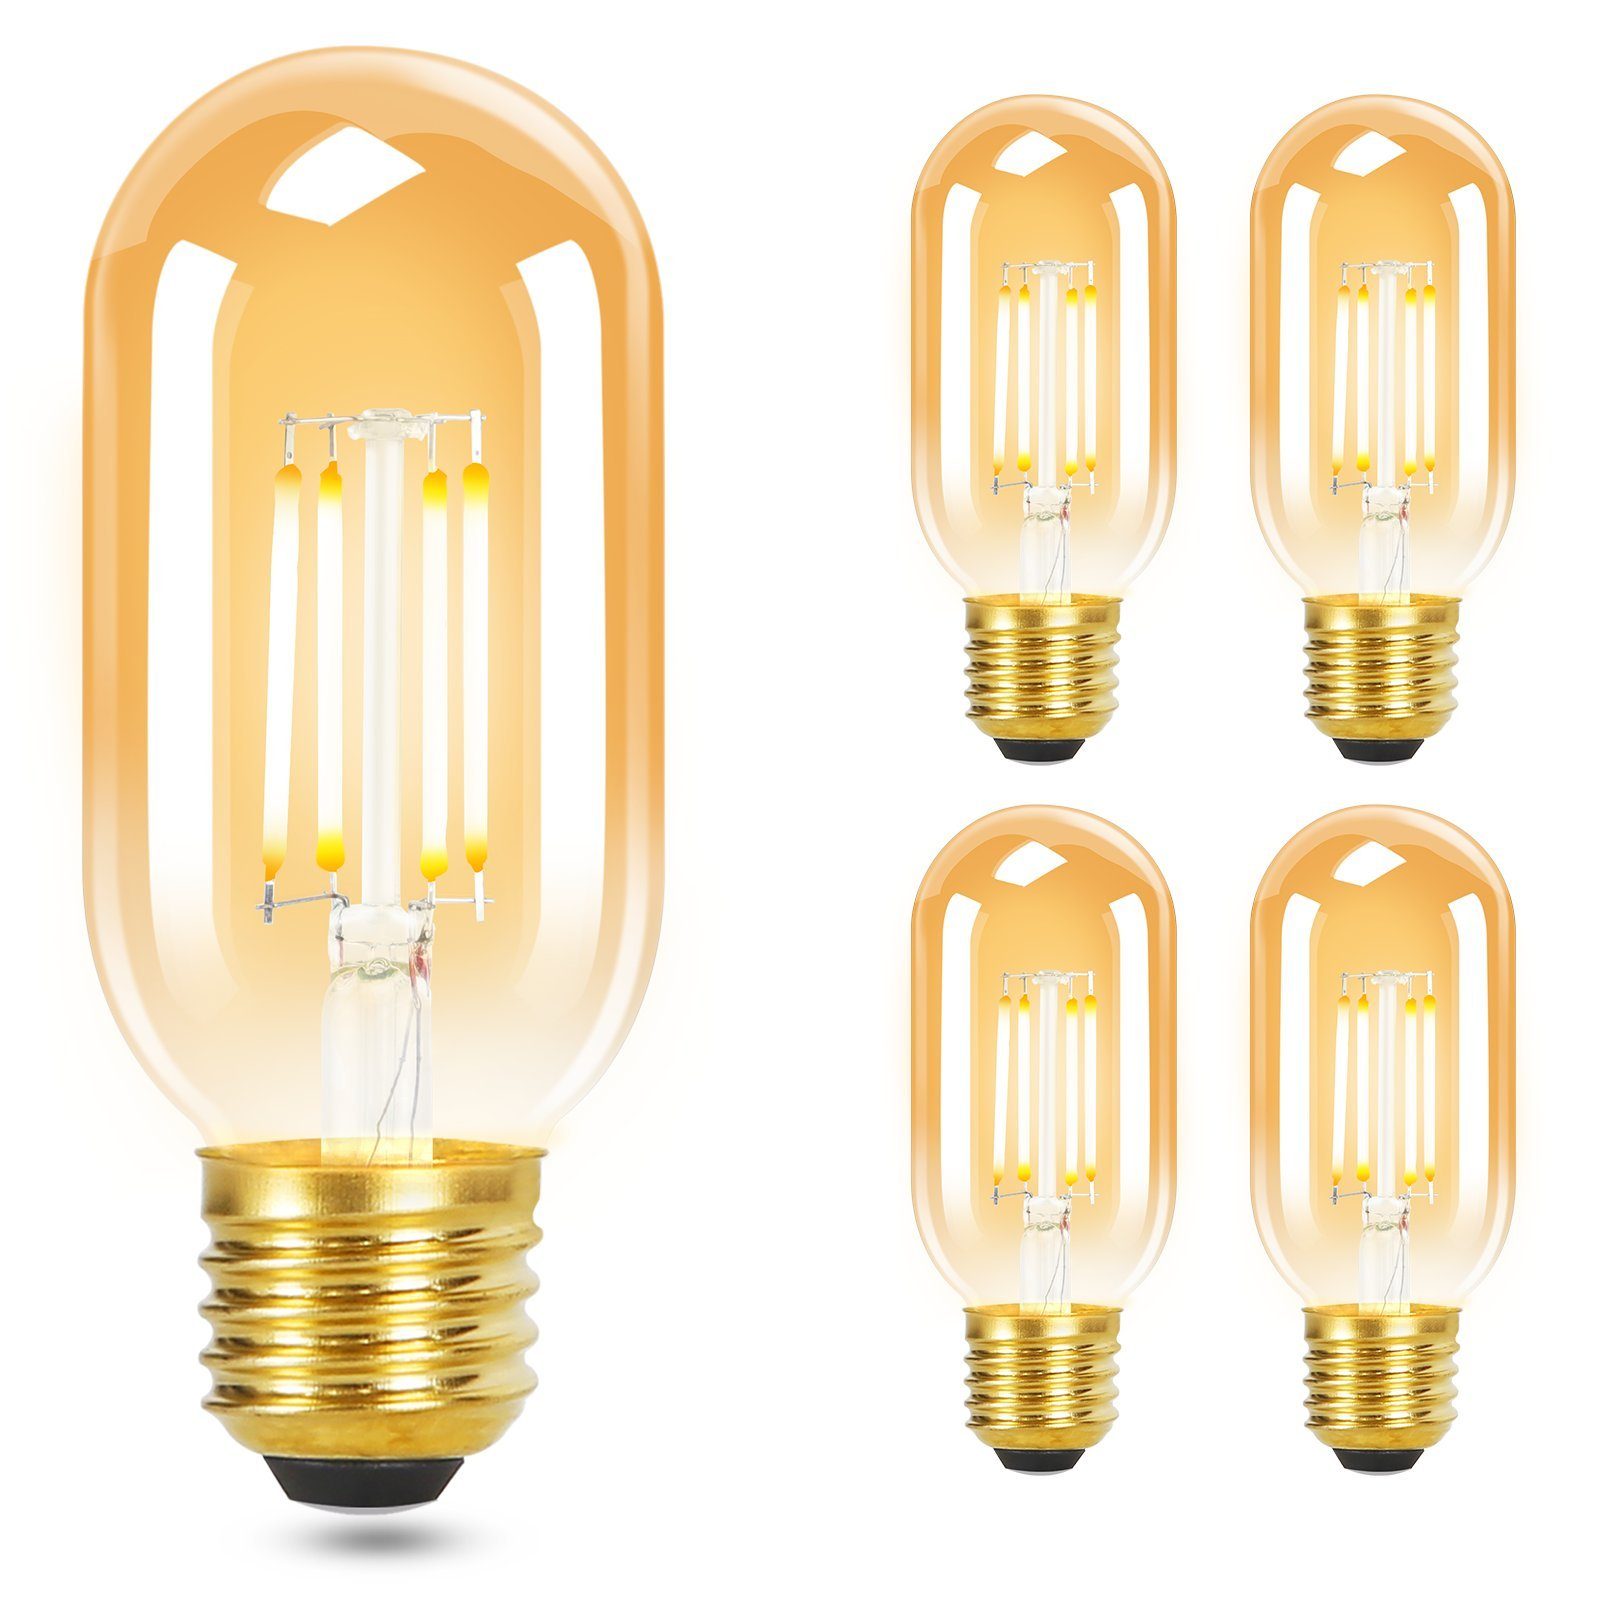 ZMH LED-Leuchtmittel LED Glühbirnen Vintage Lampe 4W Energiesparlampe Flur, E27, 4 St., 2700K, Nicht Dimmbar Gelbbraun